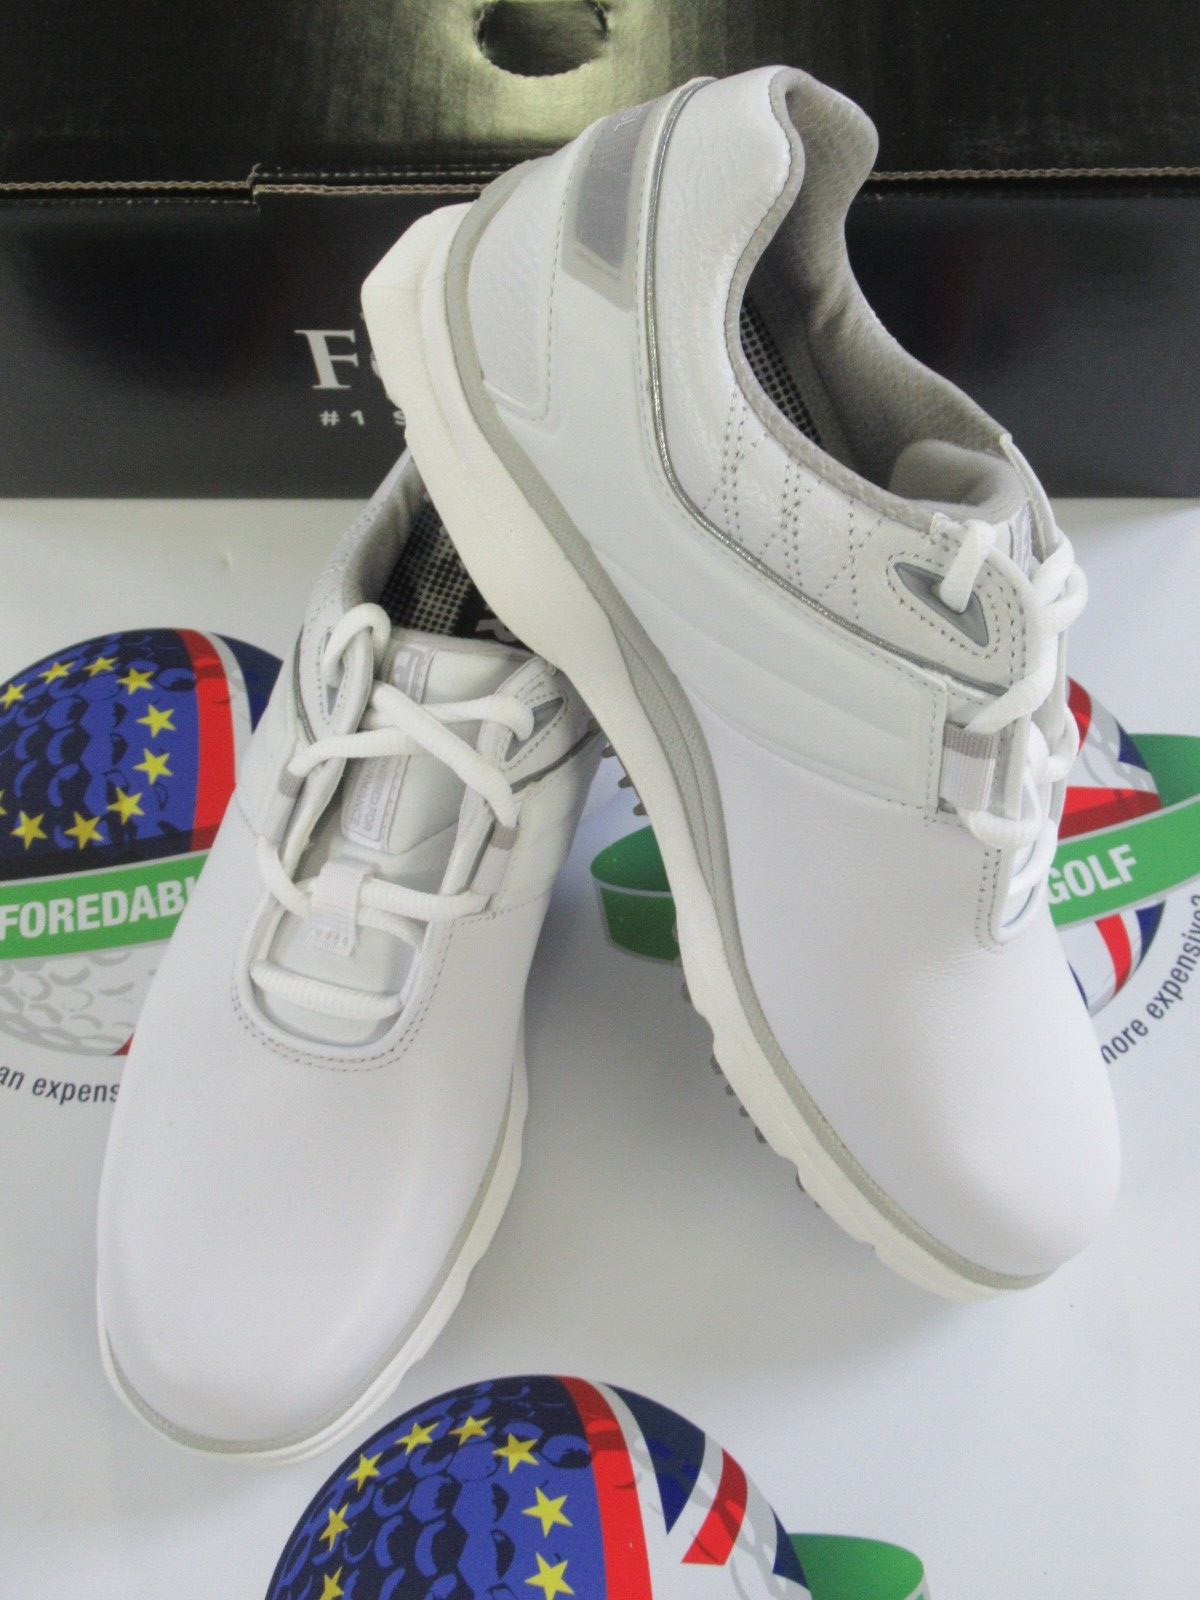 footjoy pro sl womens golf shoes white/silver uk size 7.5 wide/large